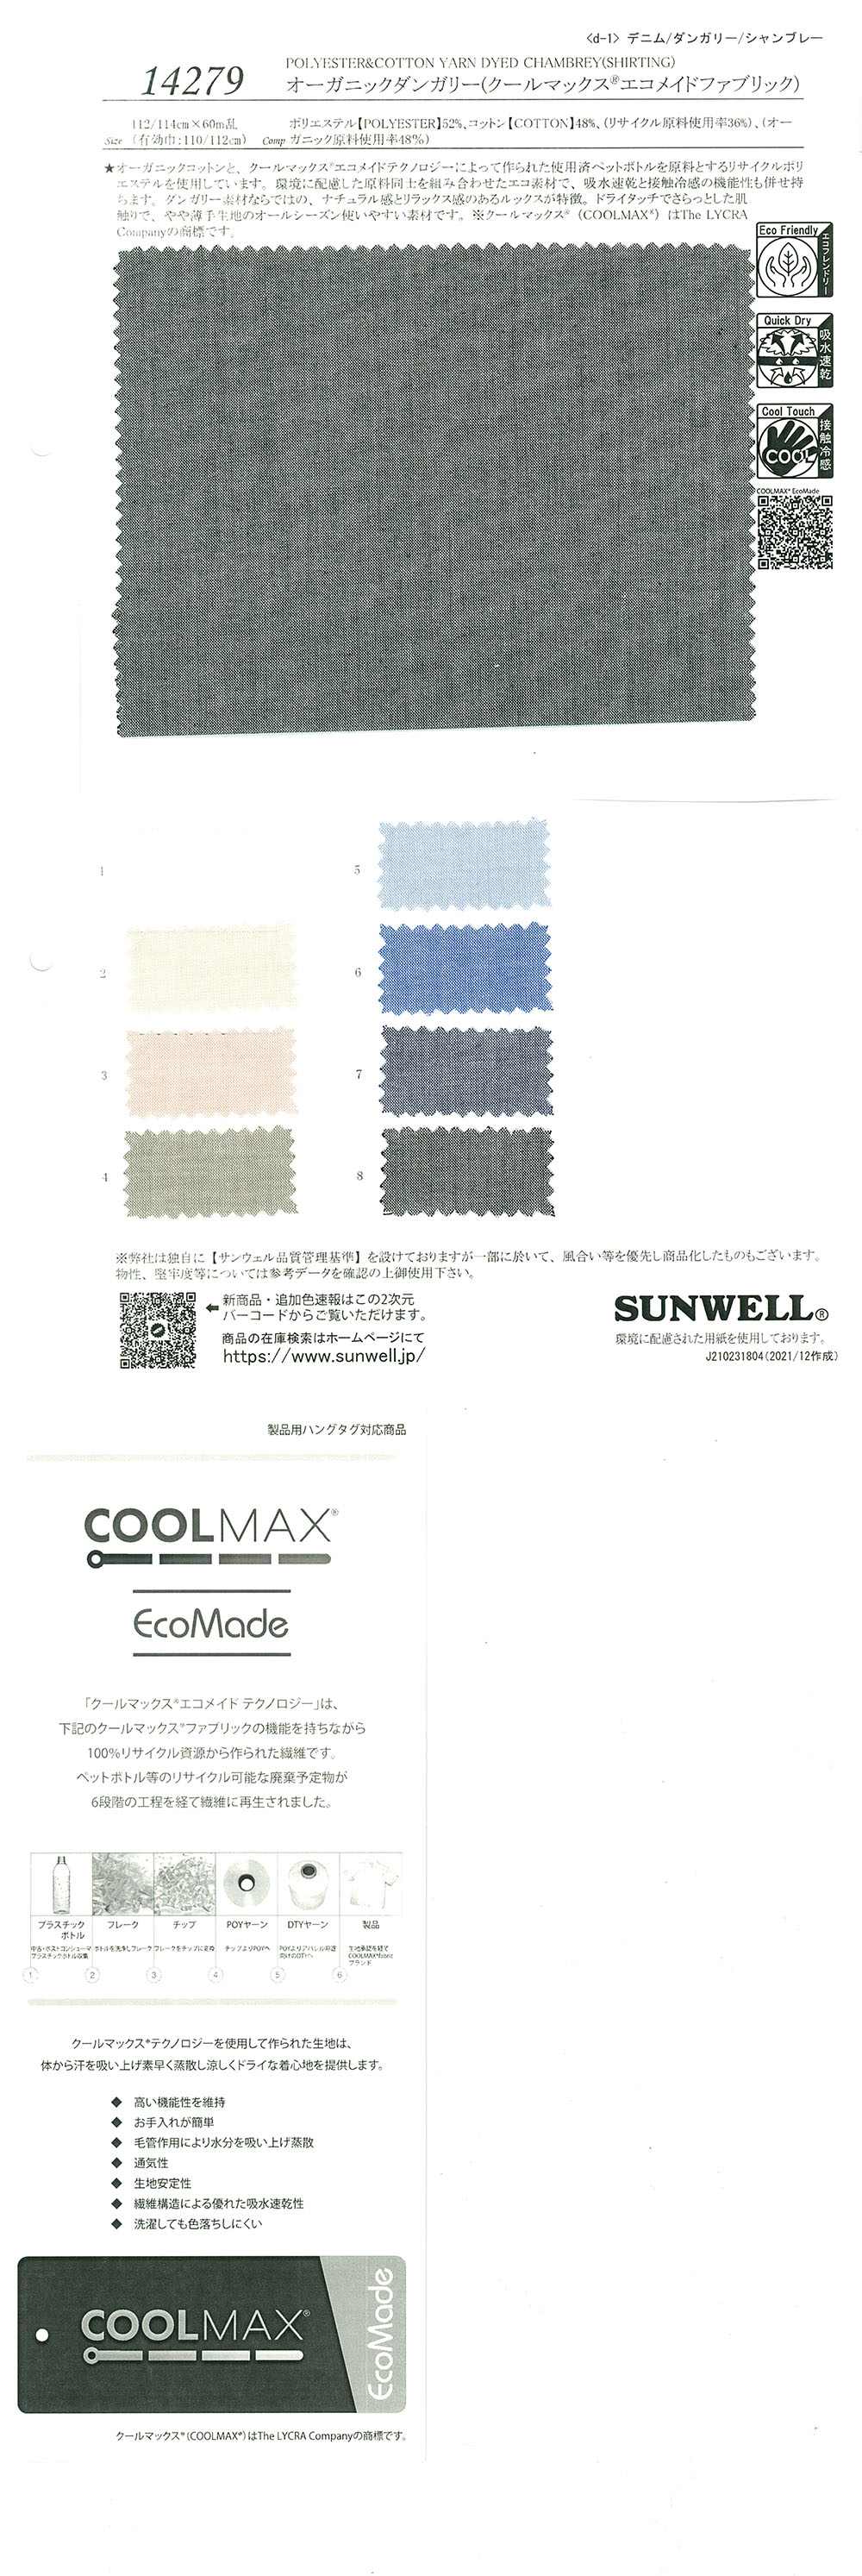 14279 Latzhose Aus Bio-Baumwolle (Coolmax(R) Ecomade-Stoff)[Textilgewebe] SUNWELL